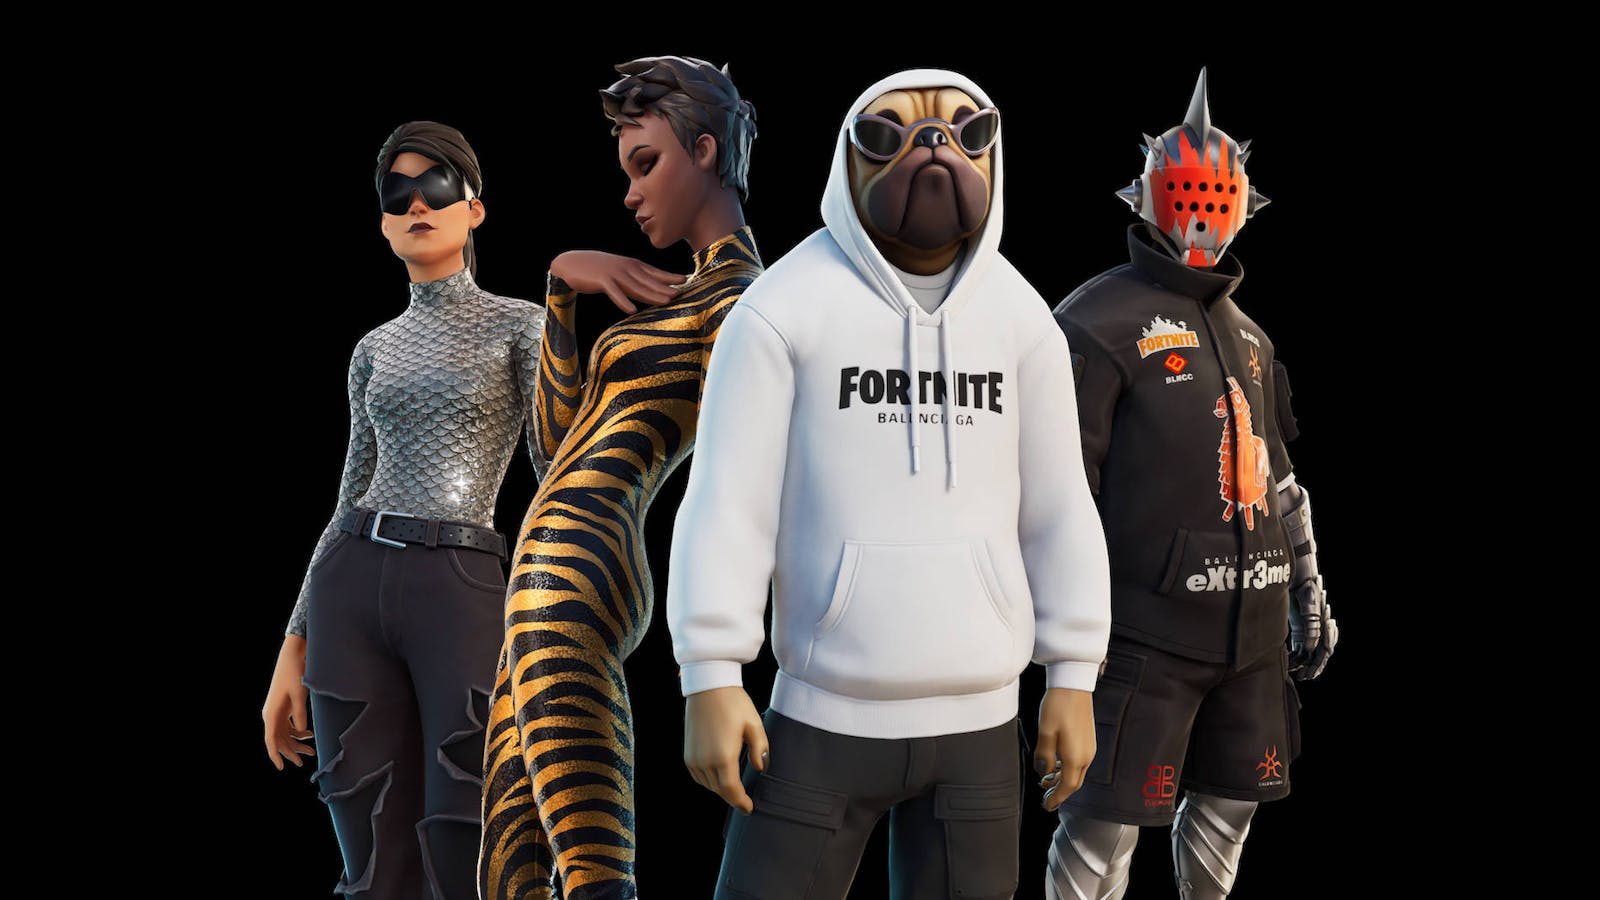 Fortnite characters sporting Balenciaga outfits, a recent metaverse-forward partnership. Credit: Epic Games